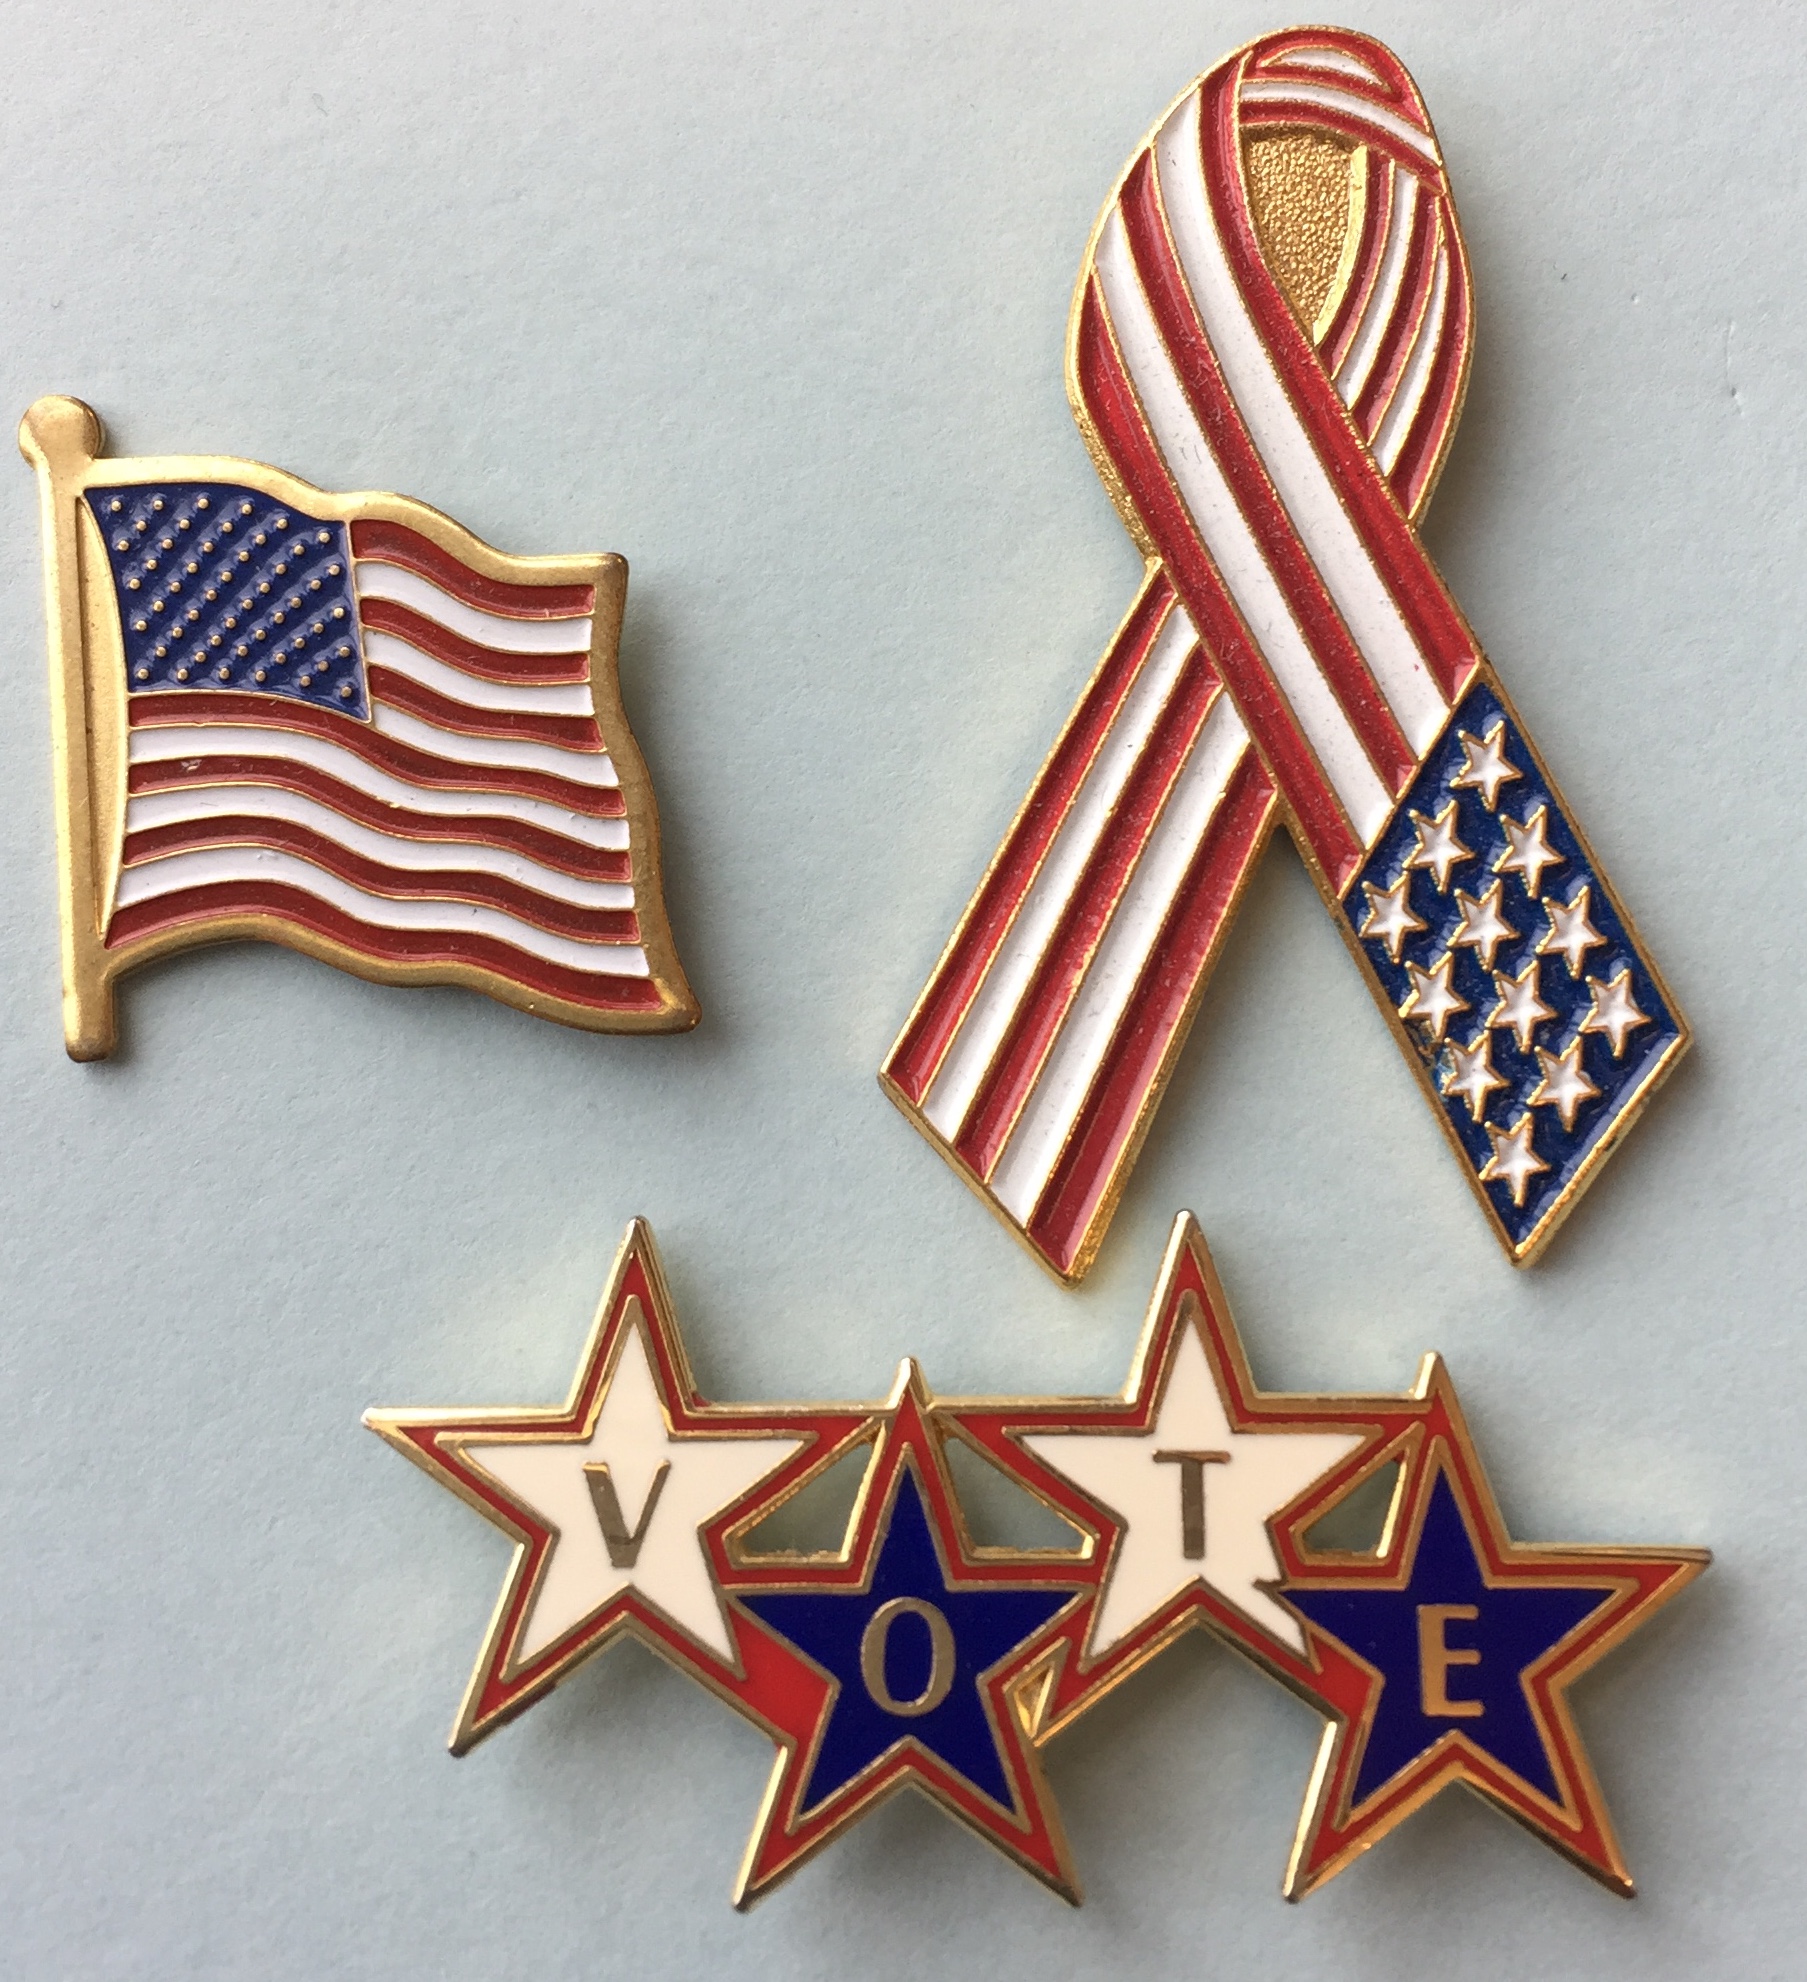 Pins: American Flag, Red-White-Blue Ribbon, VOTE